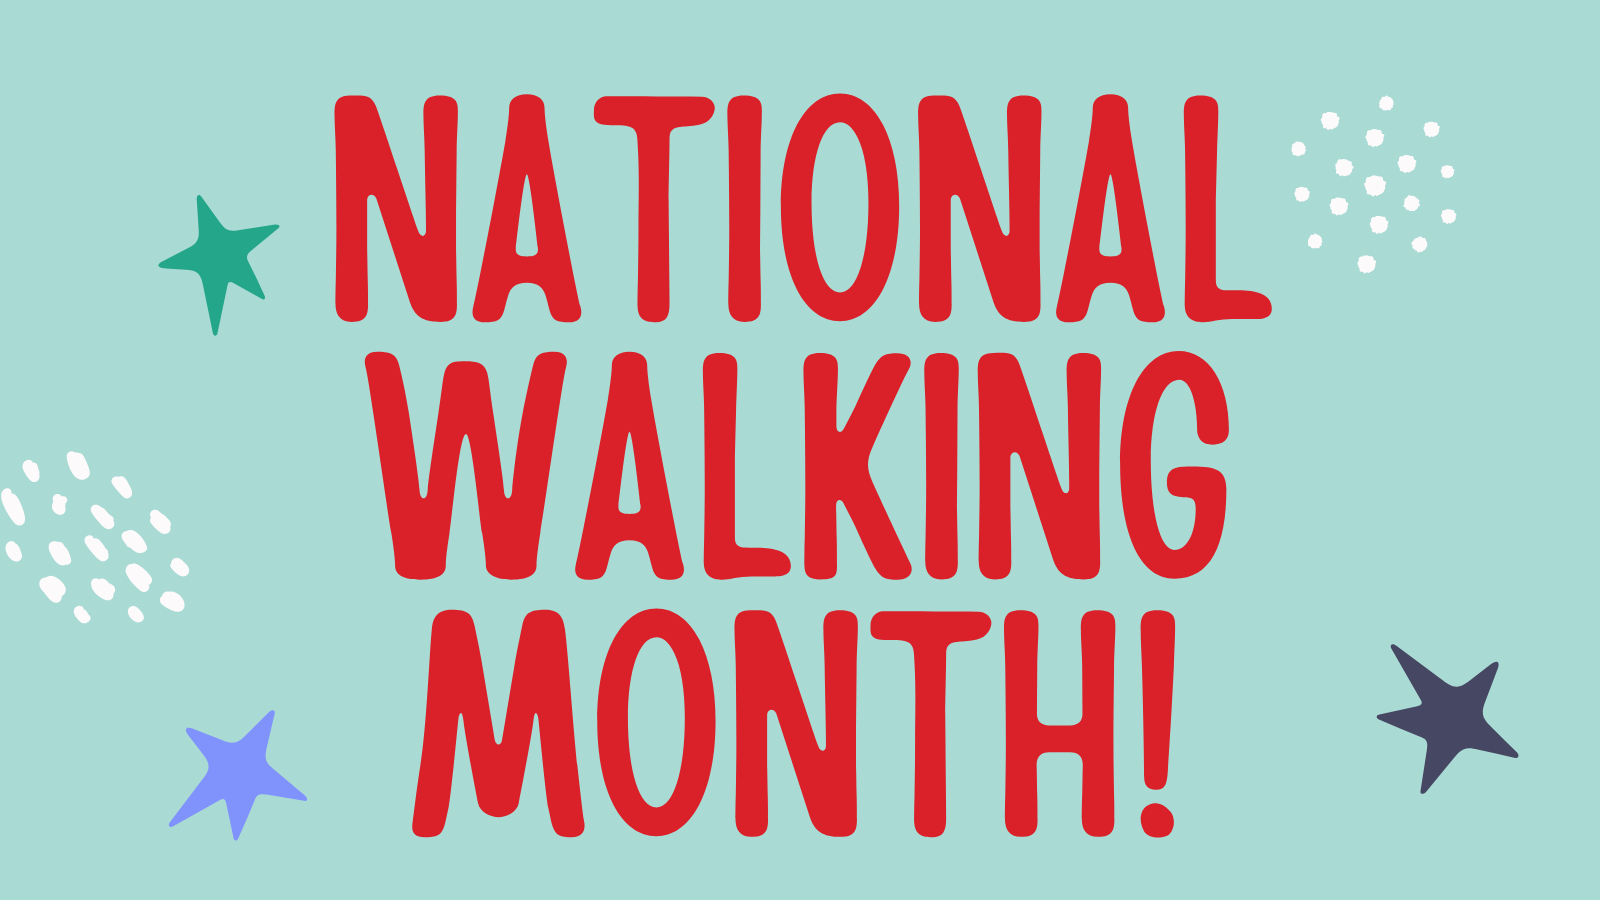 National Walking Month design